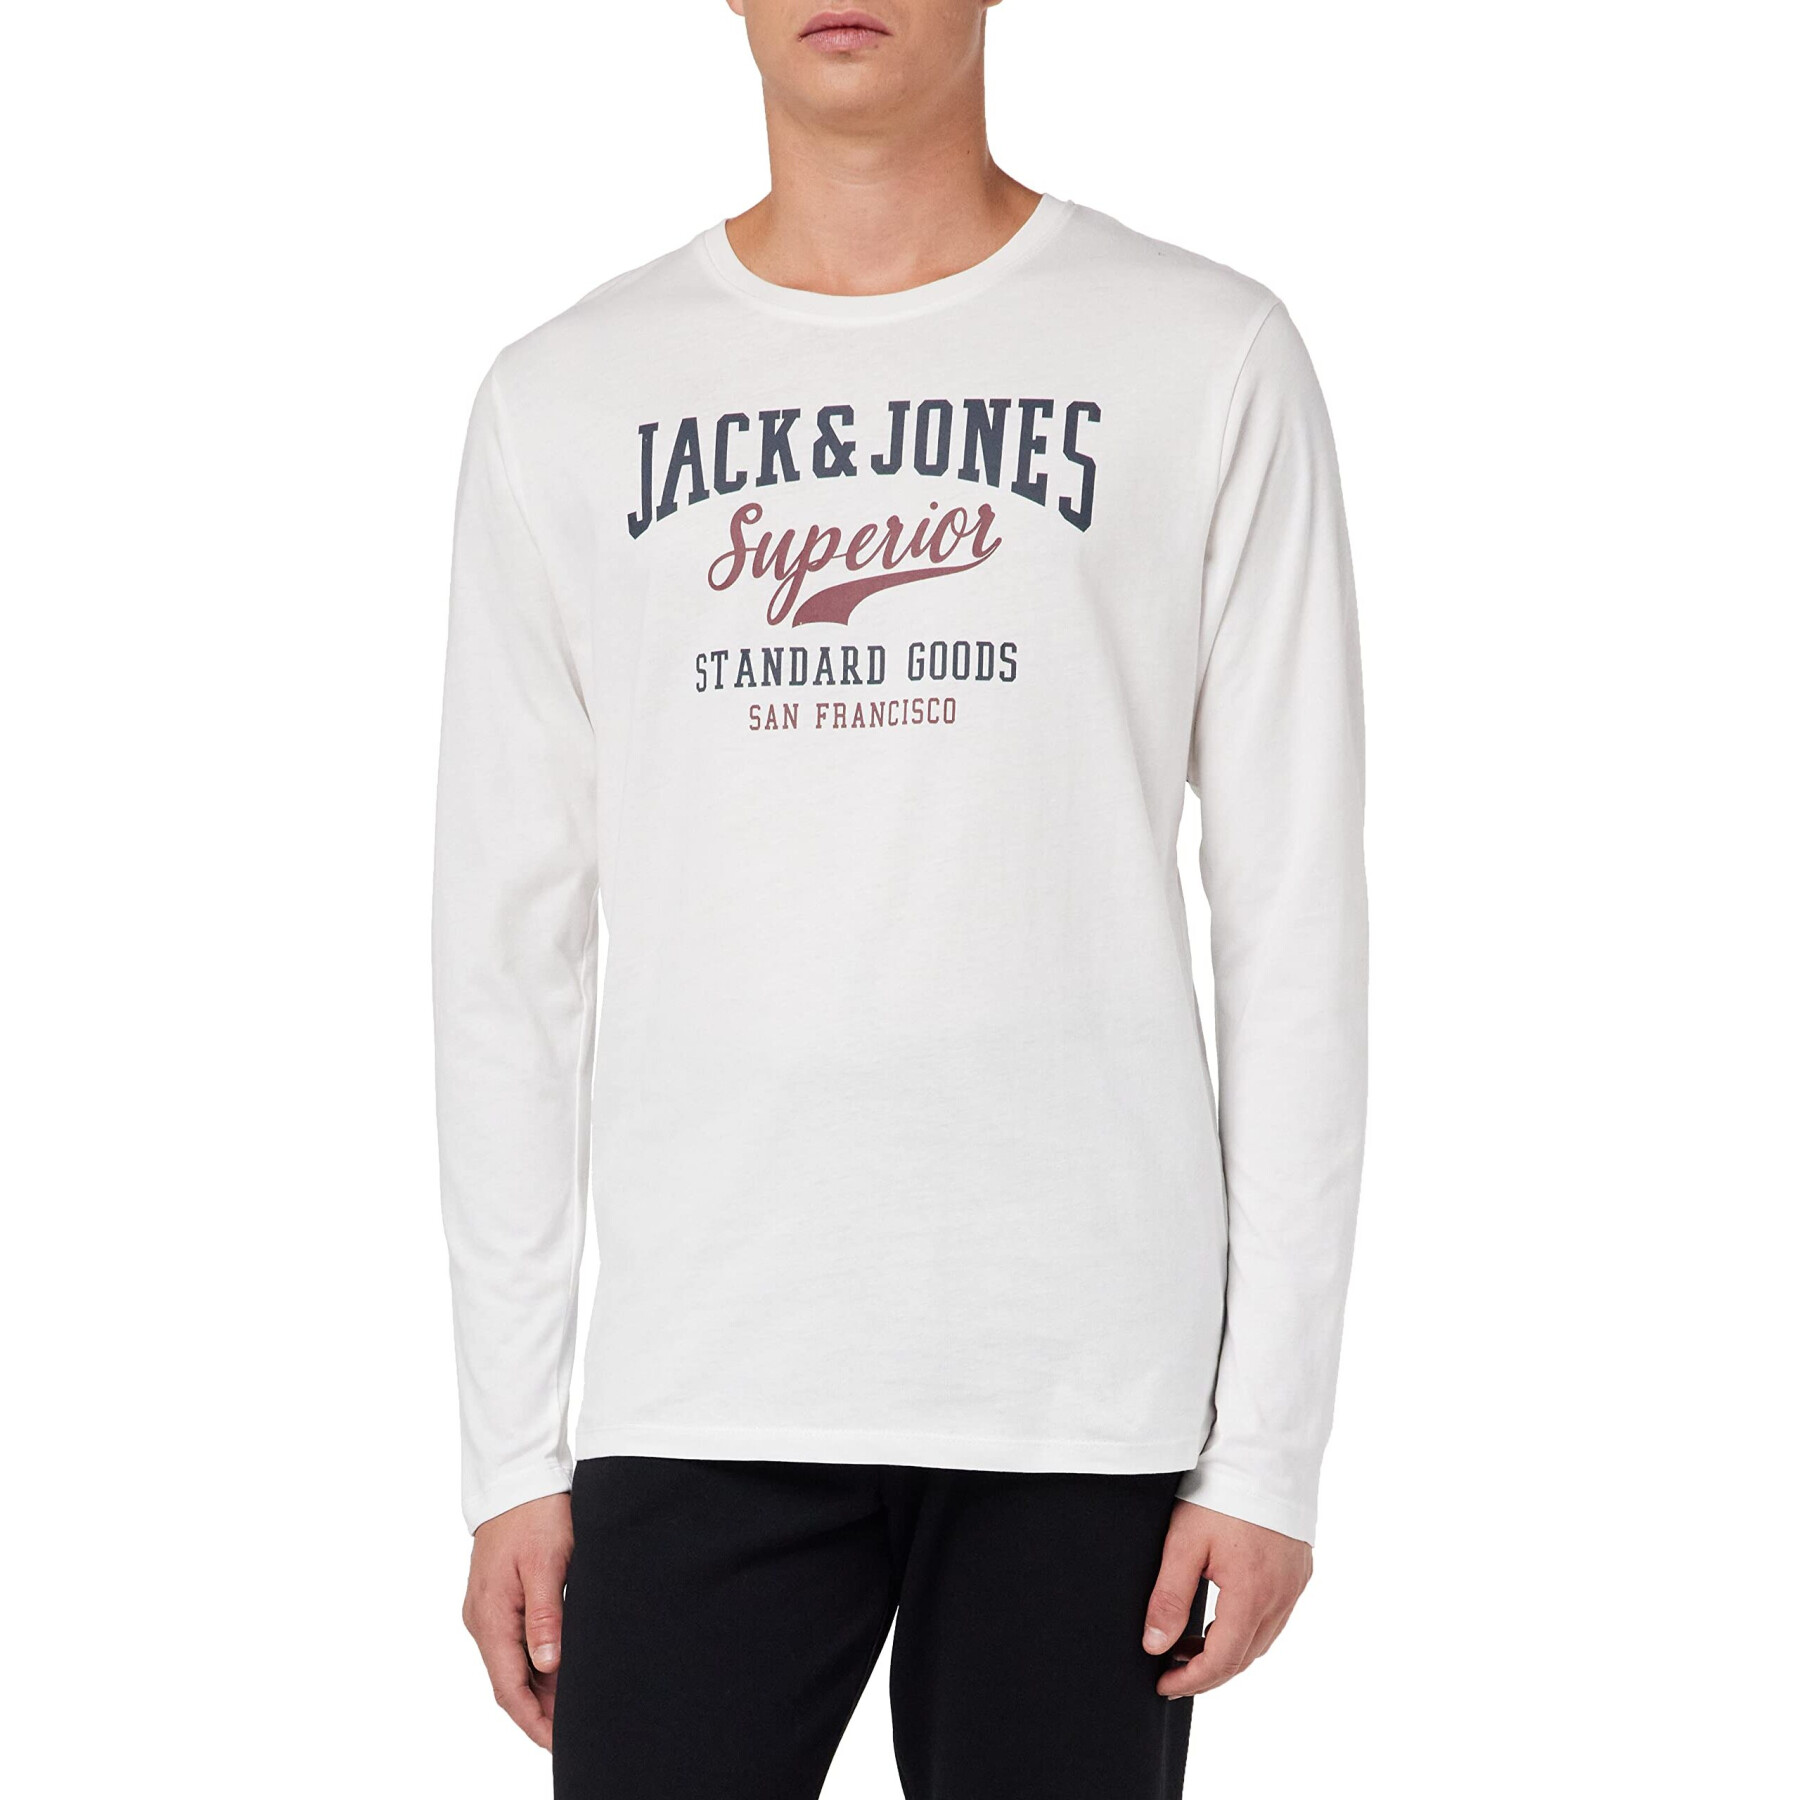 Camiseta Collar-o Jack & Jones Jjelogo 2